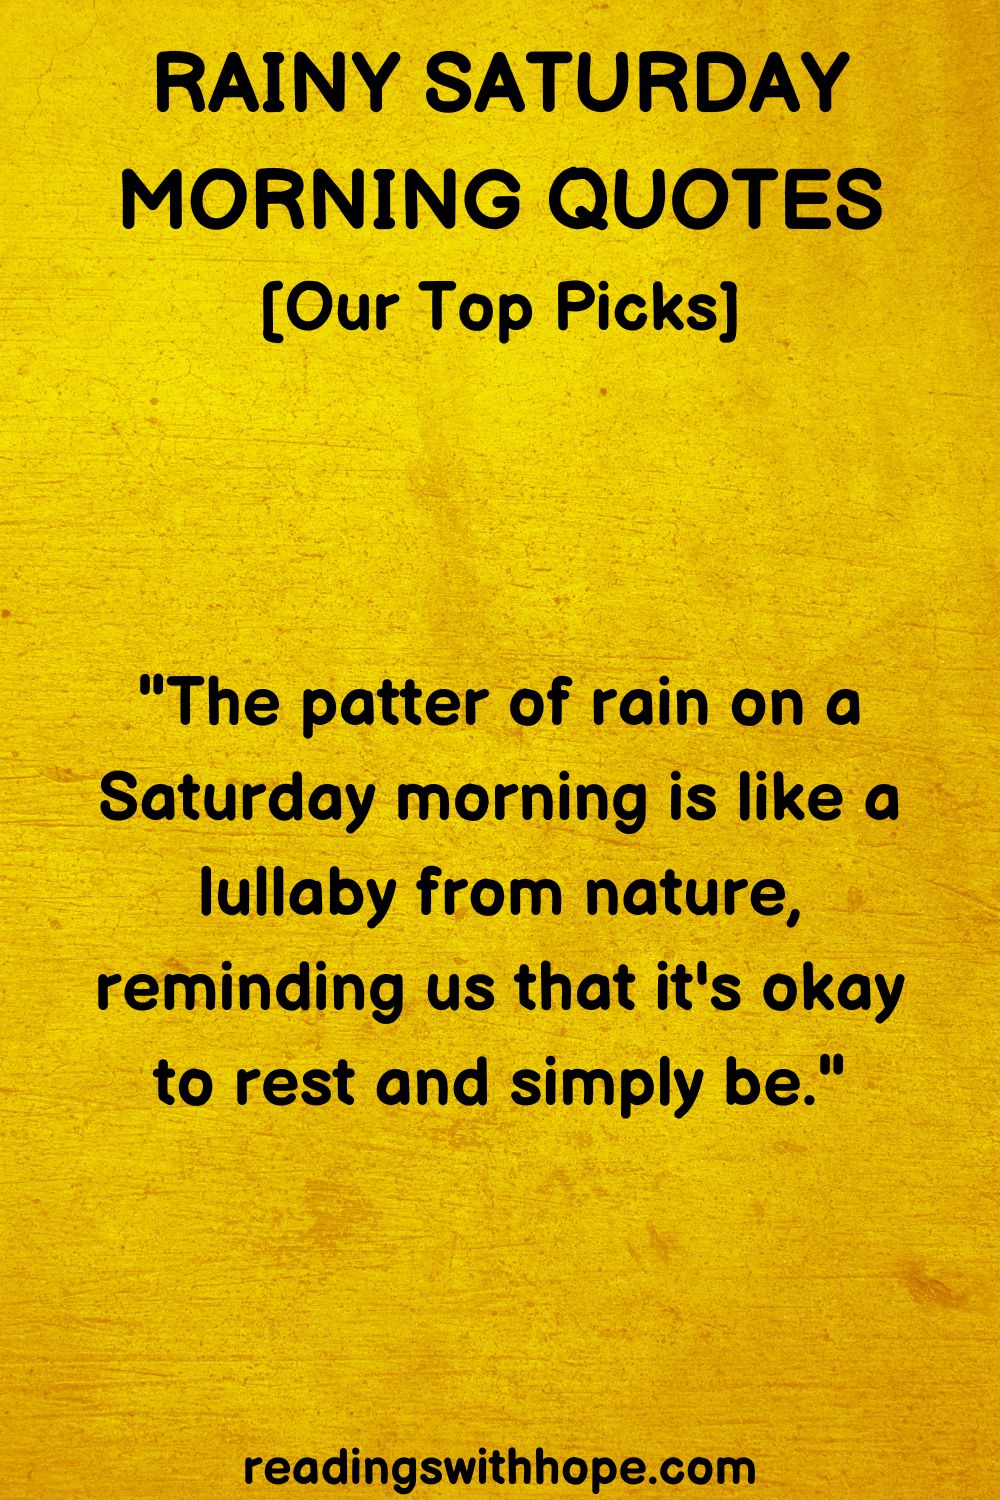 Rainy Saturday Morning Quotes